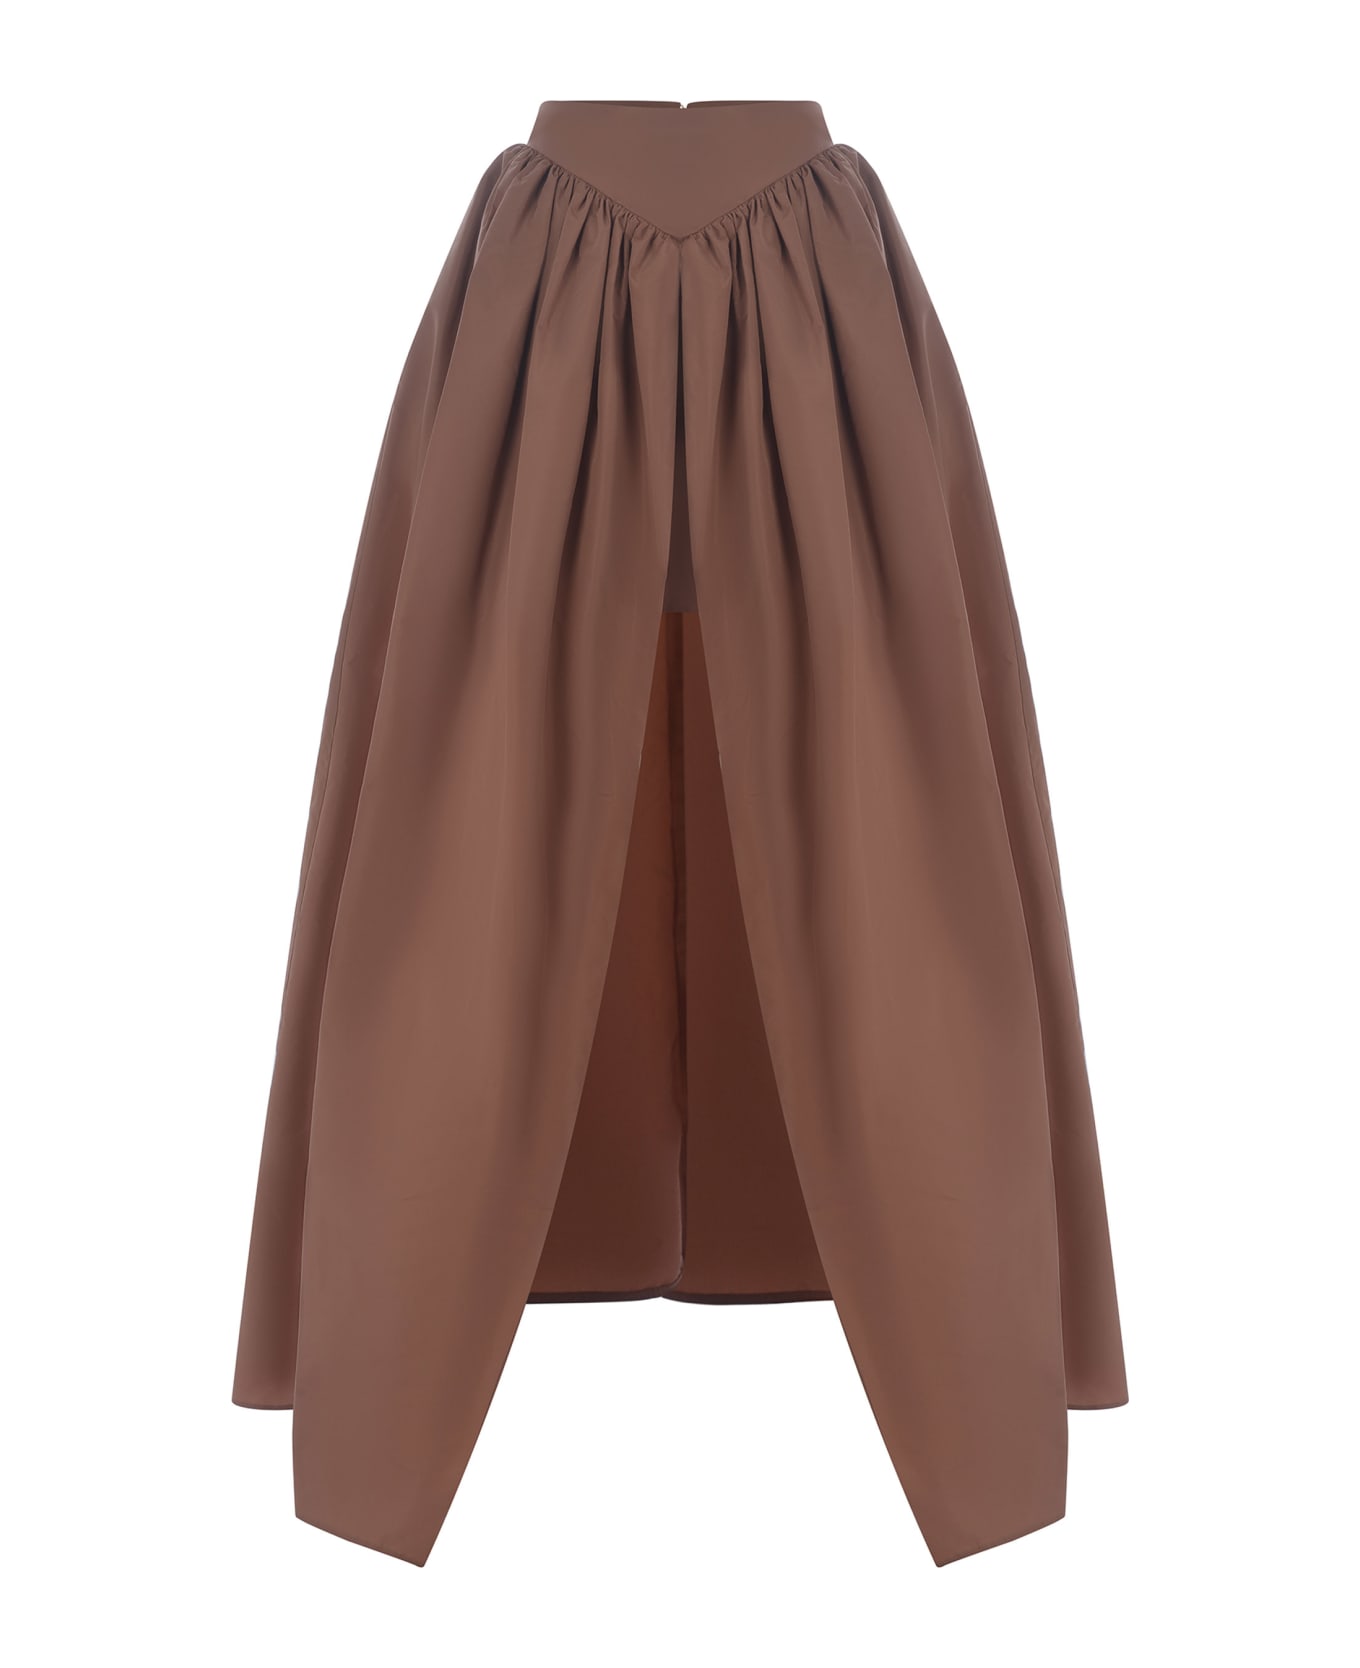 Pinko Long Skirt Made Of Taffeta - Marrone Fard Rosiccio スカート